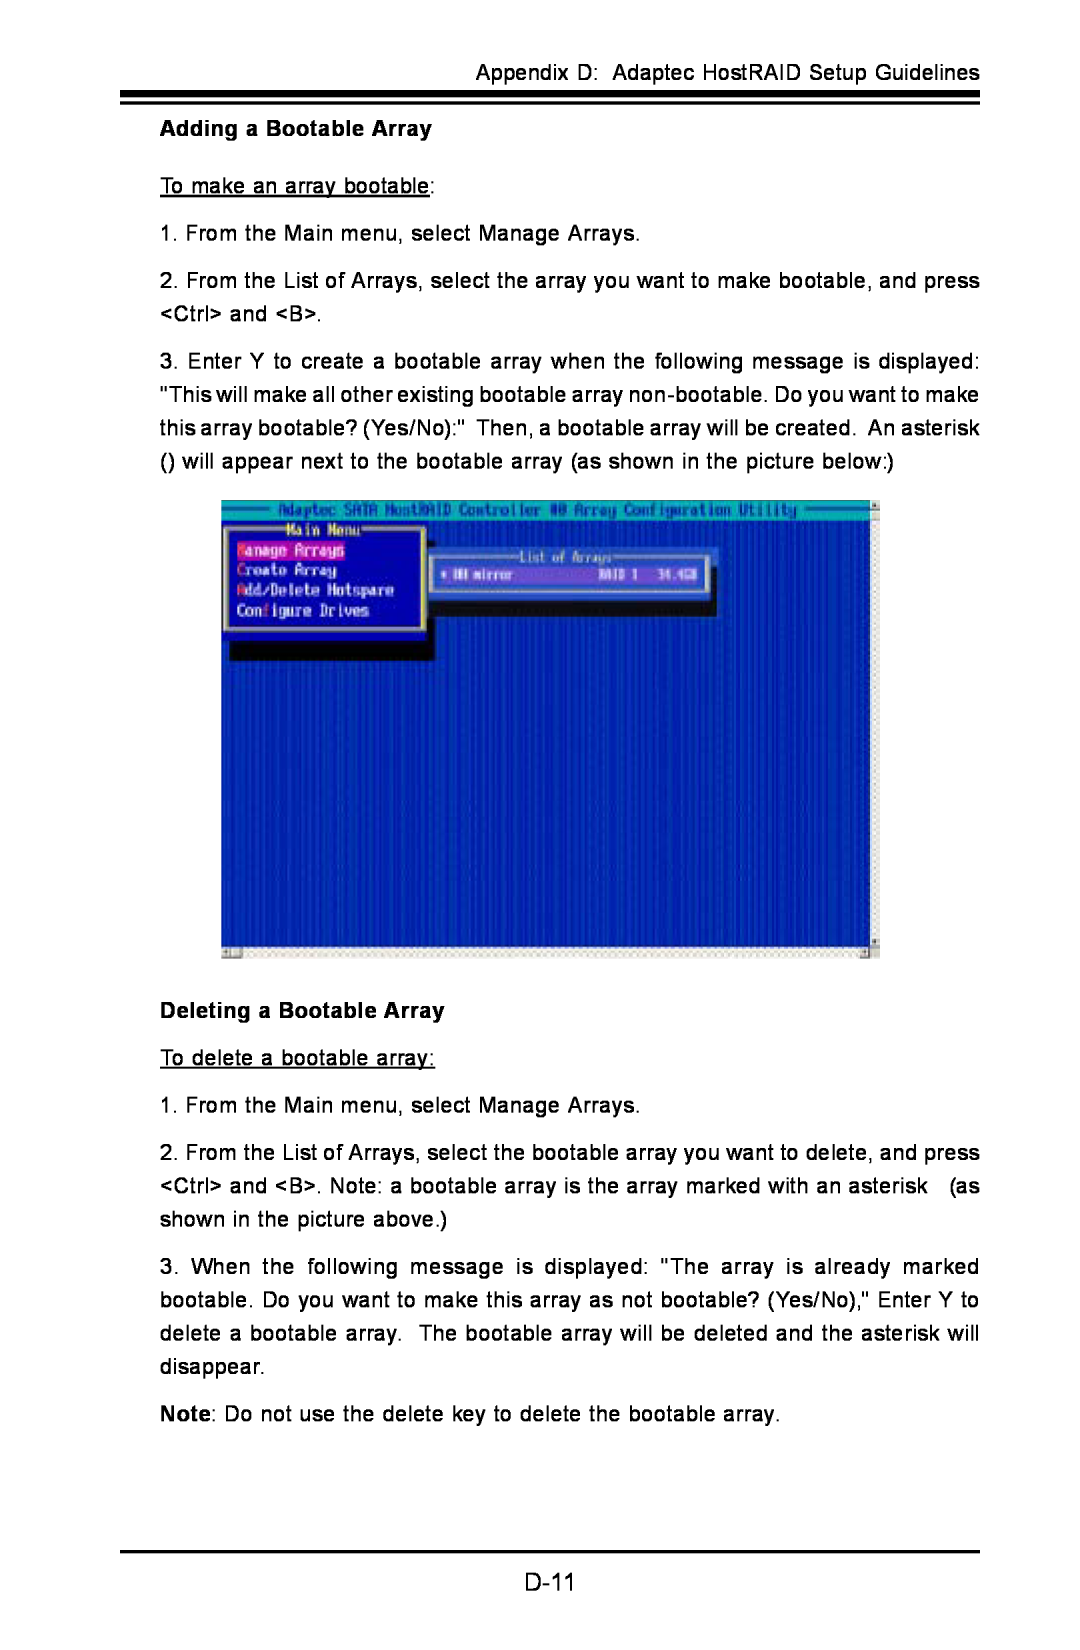 SUPER MICRO Computer C2SBE, C2SBA+II user manual D-11, Adding a Bootable Array, Deleting a Bootable Array 